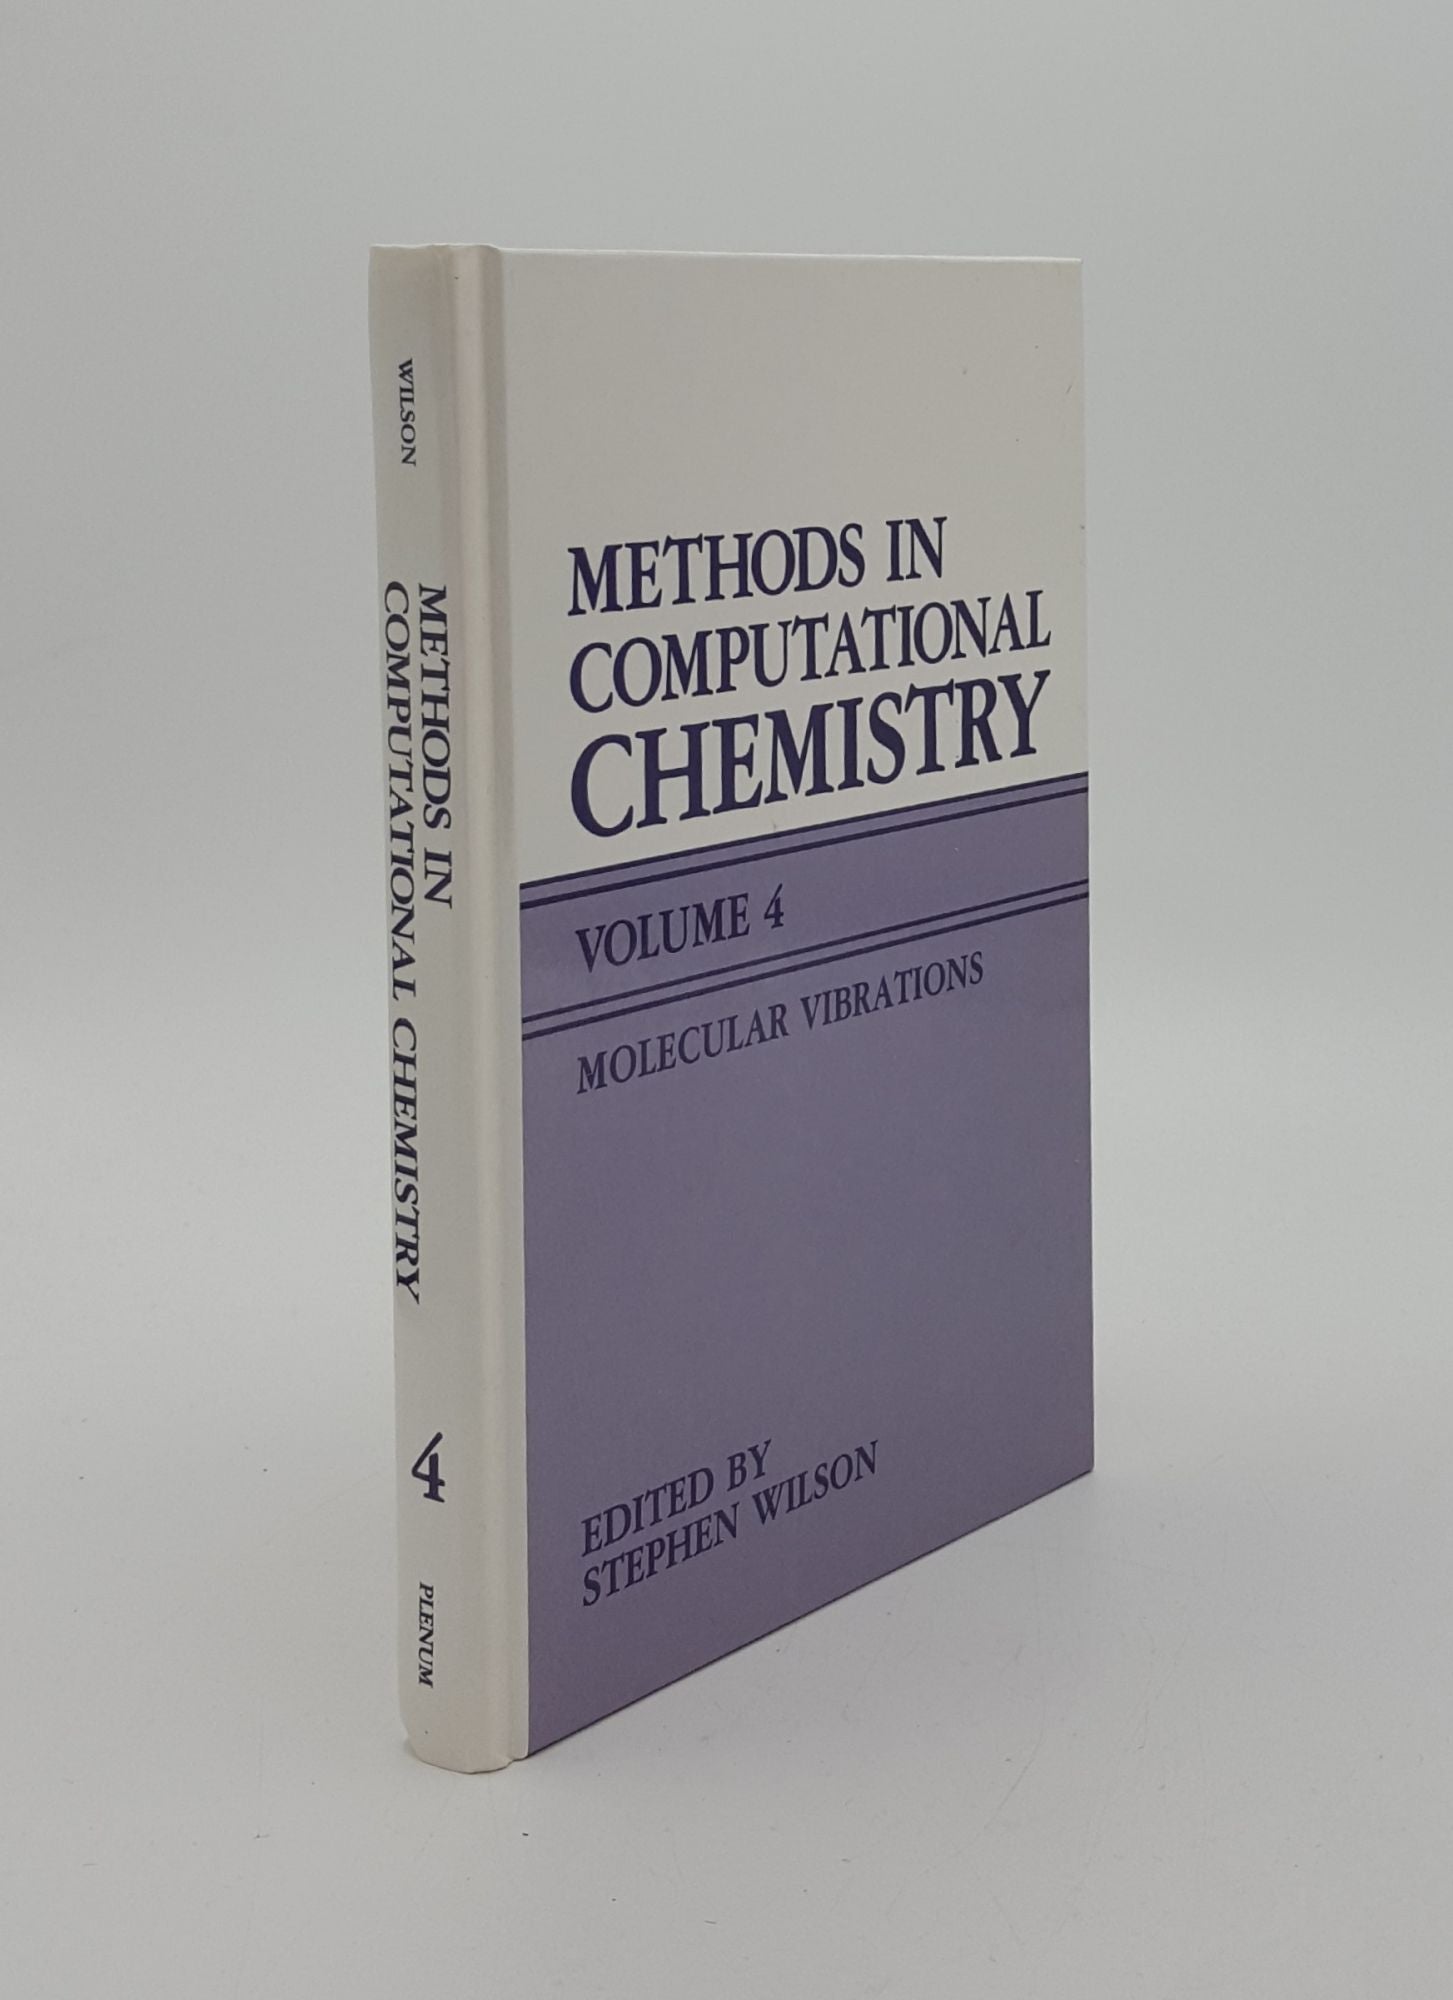 WILSON Stephen - Methods in Computational Chemistry Volume 4 Molecular Vibrations